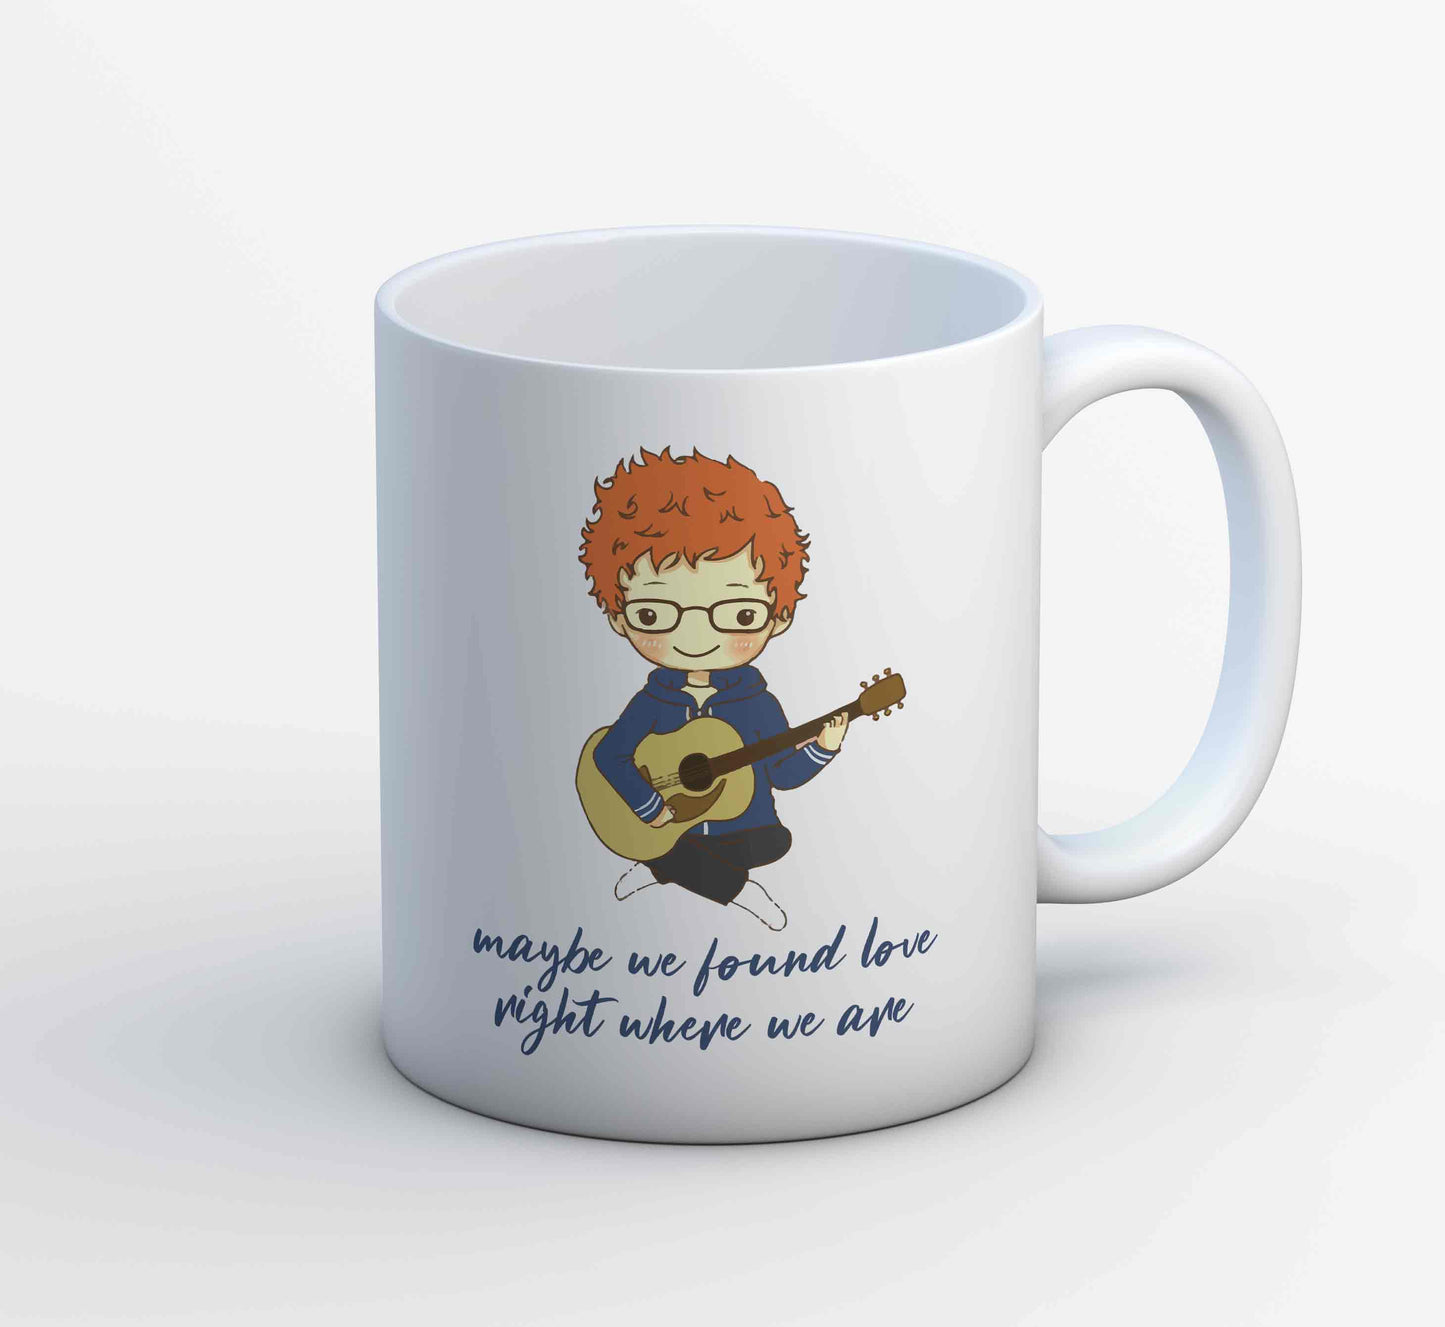 ed sheeran thinking out loud mug coffee ceramic music band buy online india the banyan tee tbt men women girls boys unisex